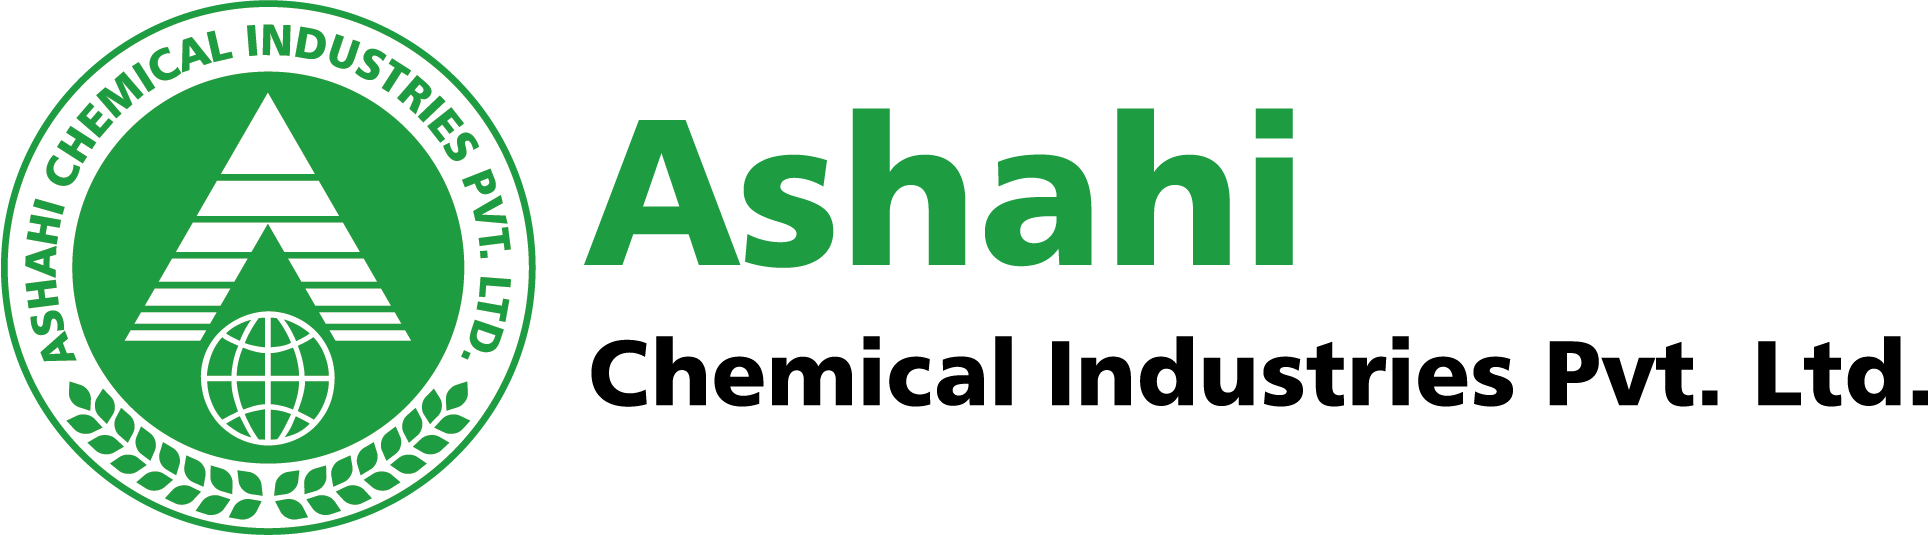 Ashahi-Chemical-Industries